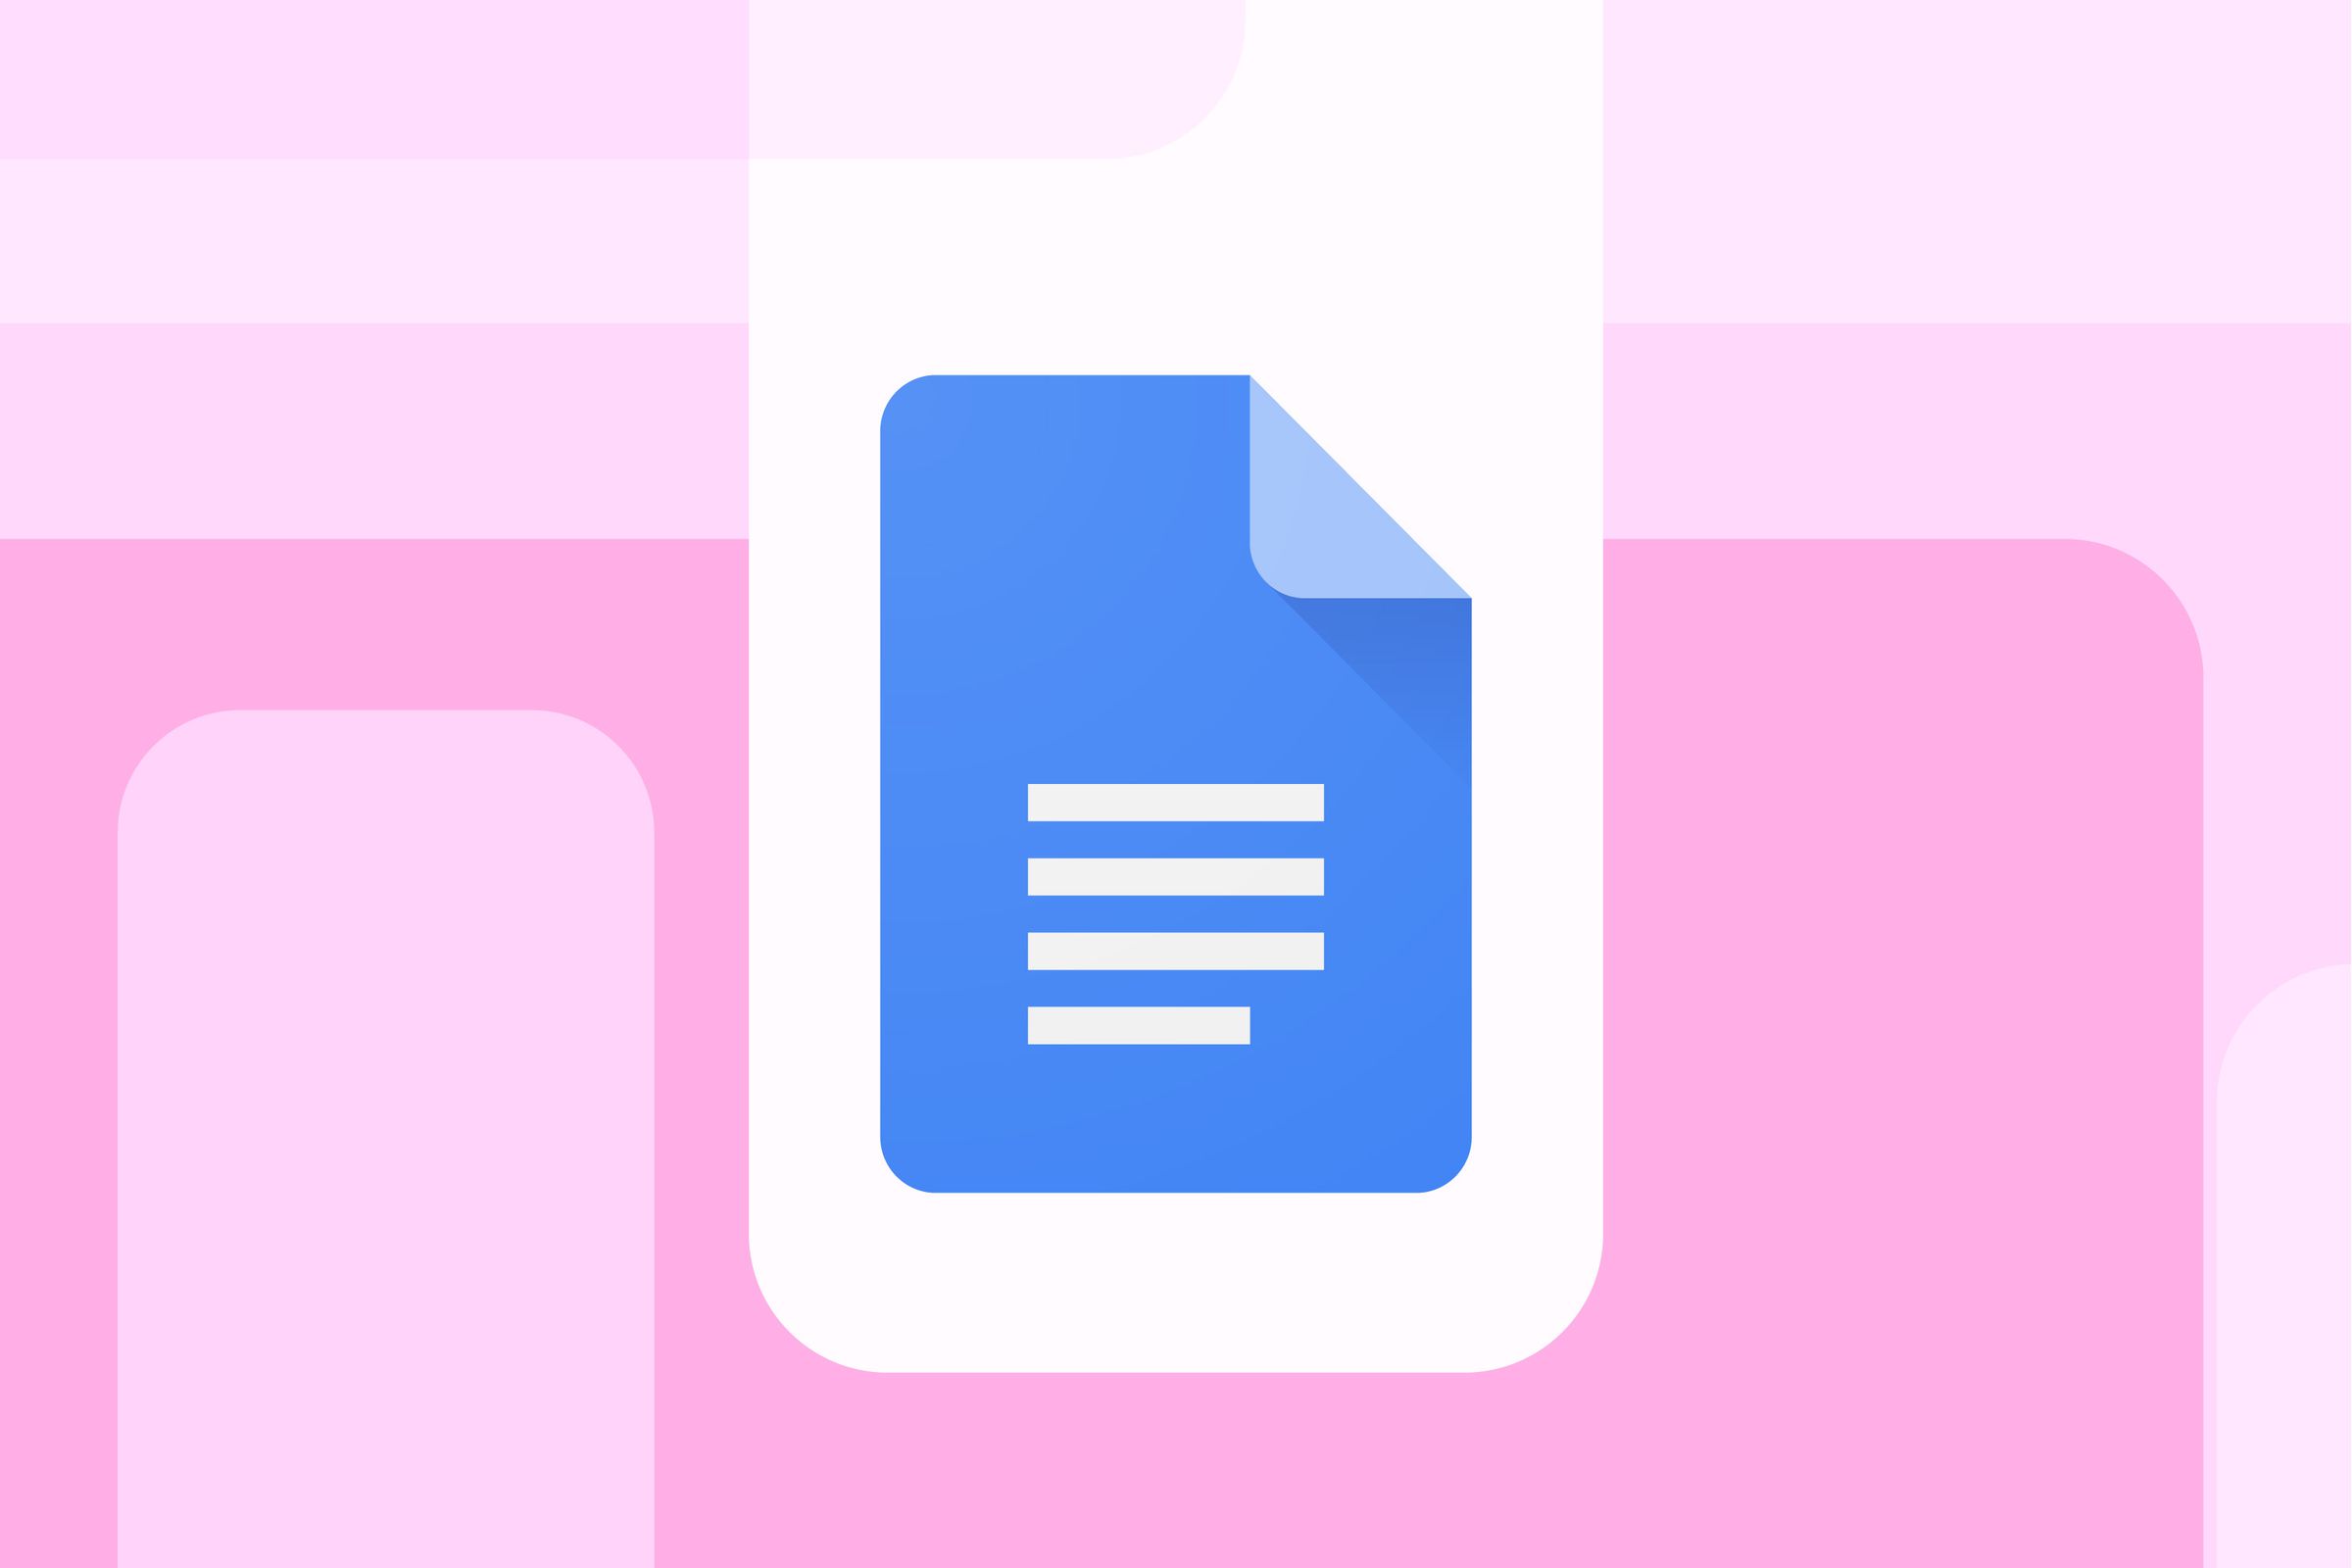 Google Doc’s logo on a pink background